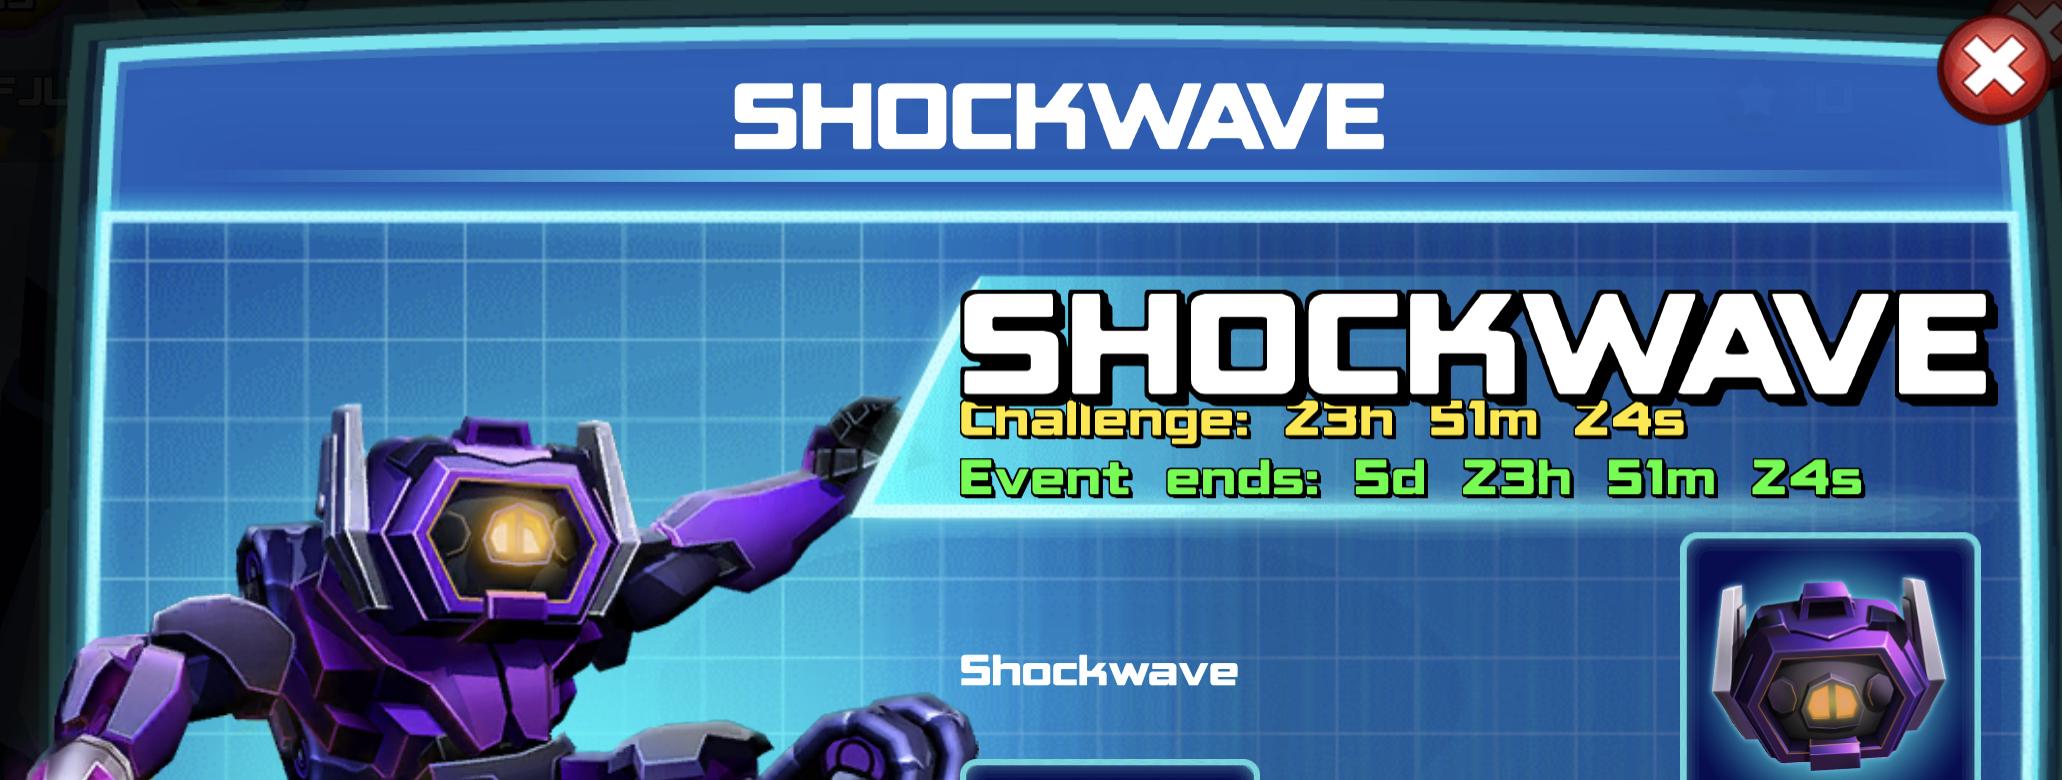 The event banner for Shockwave